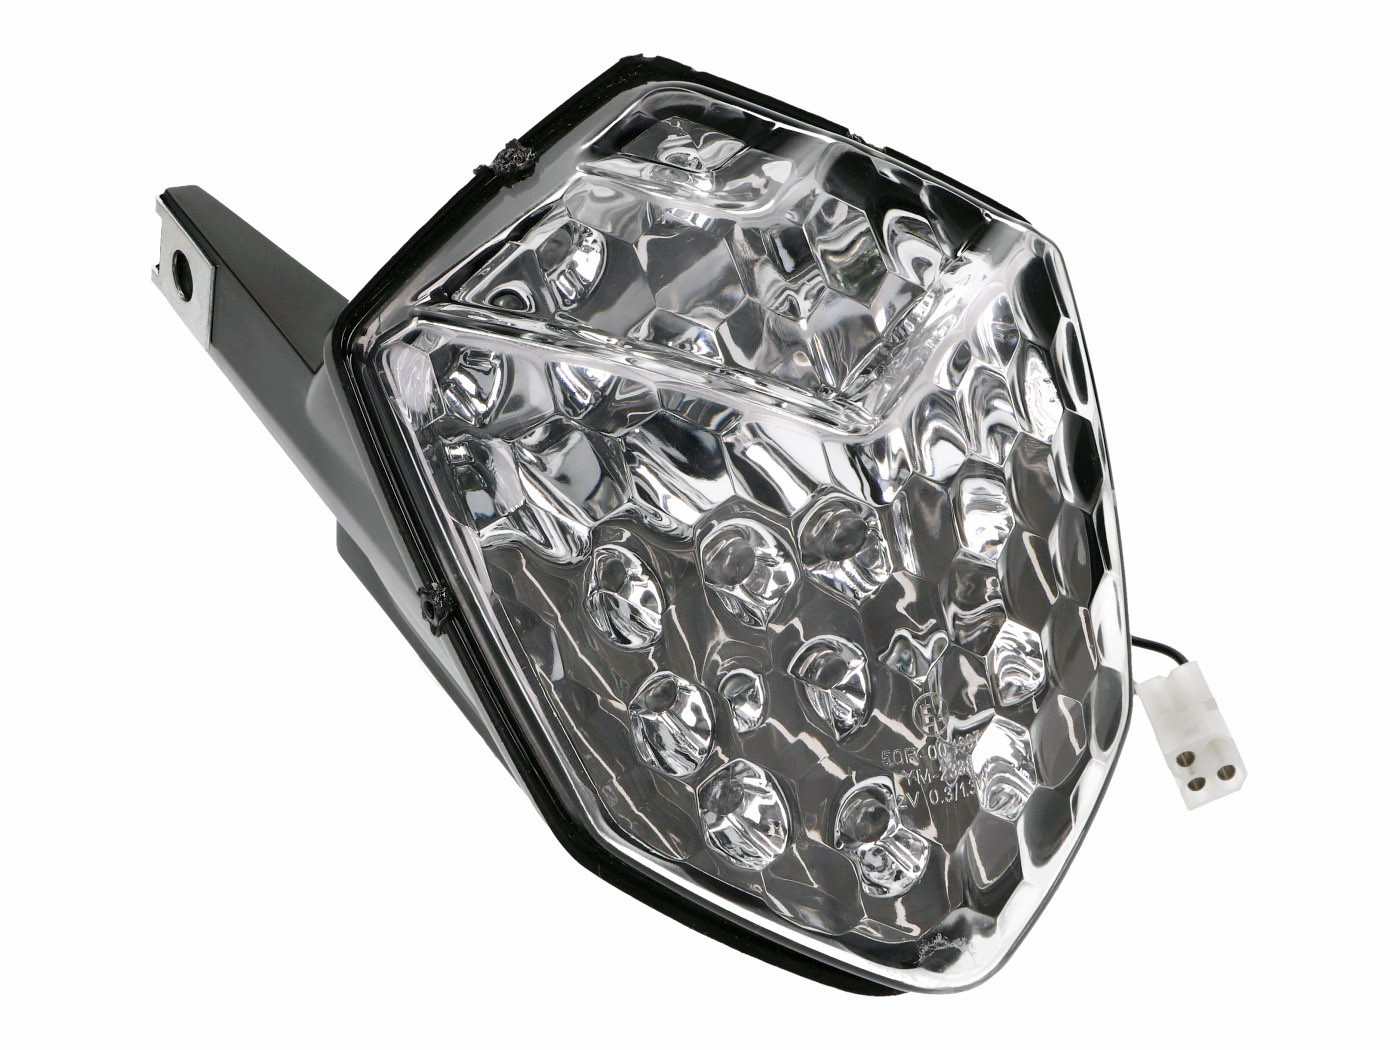 OEM LED hátsó lámpa - Rieju RS3 E4